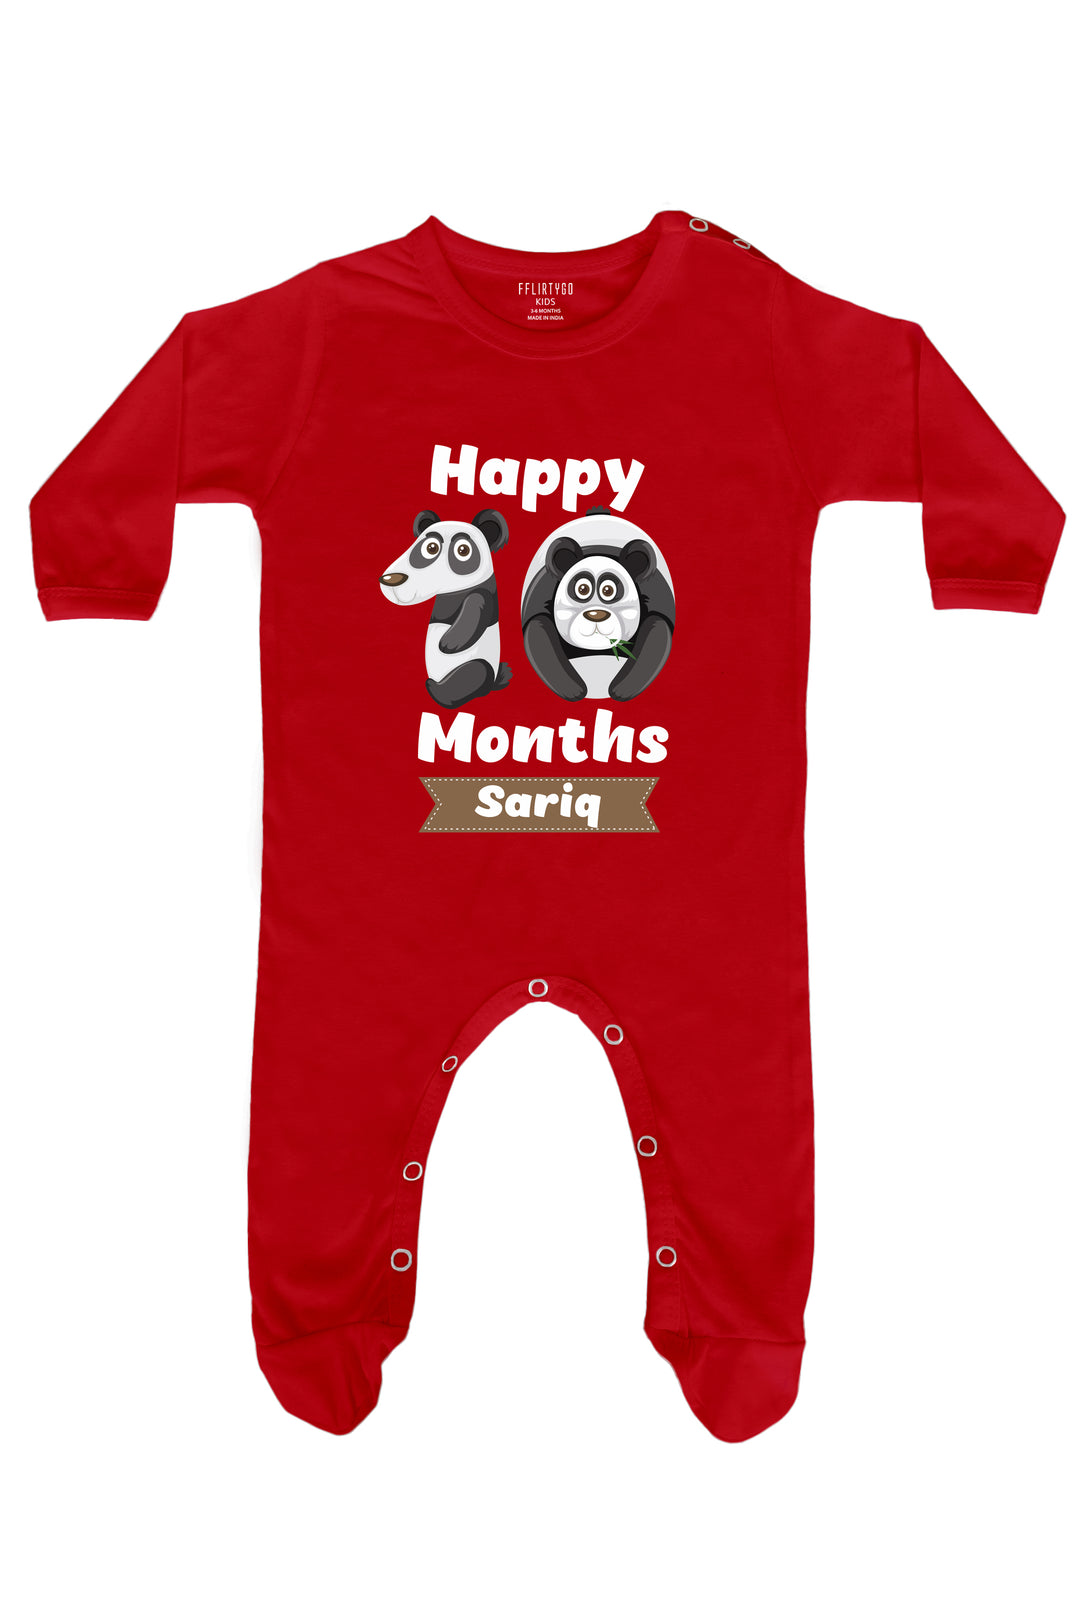 Ten Month Milestone Baby Romper | Onesies w/ Custom Name